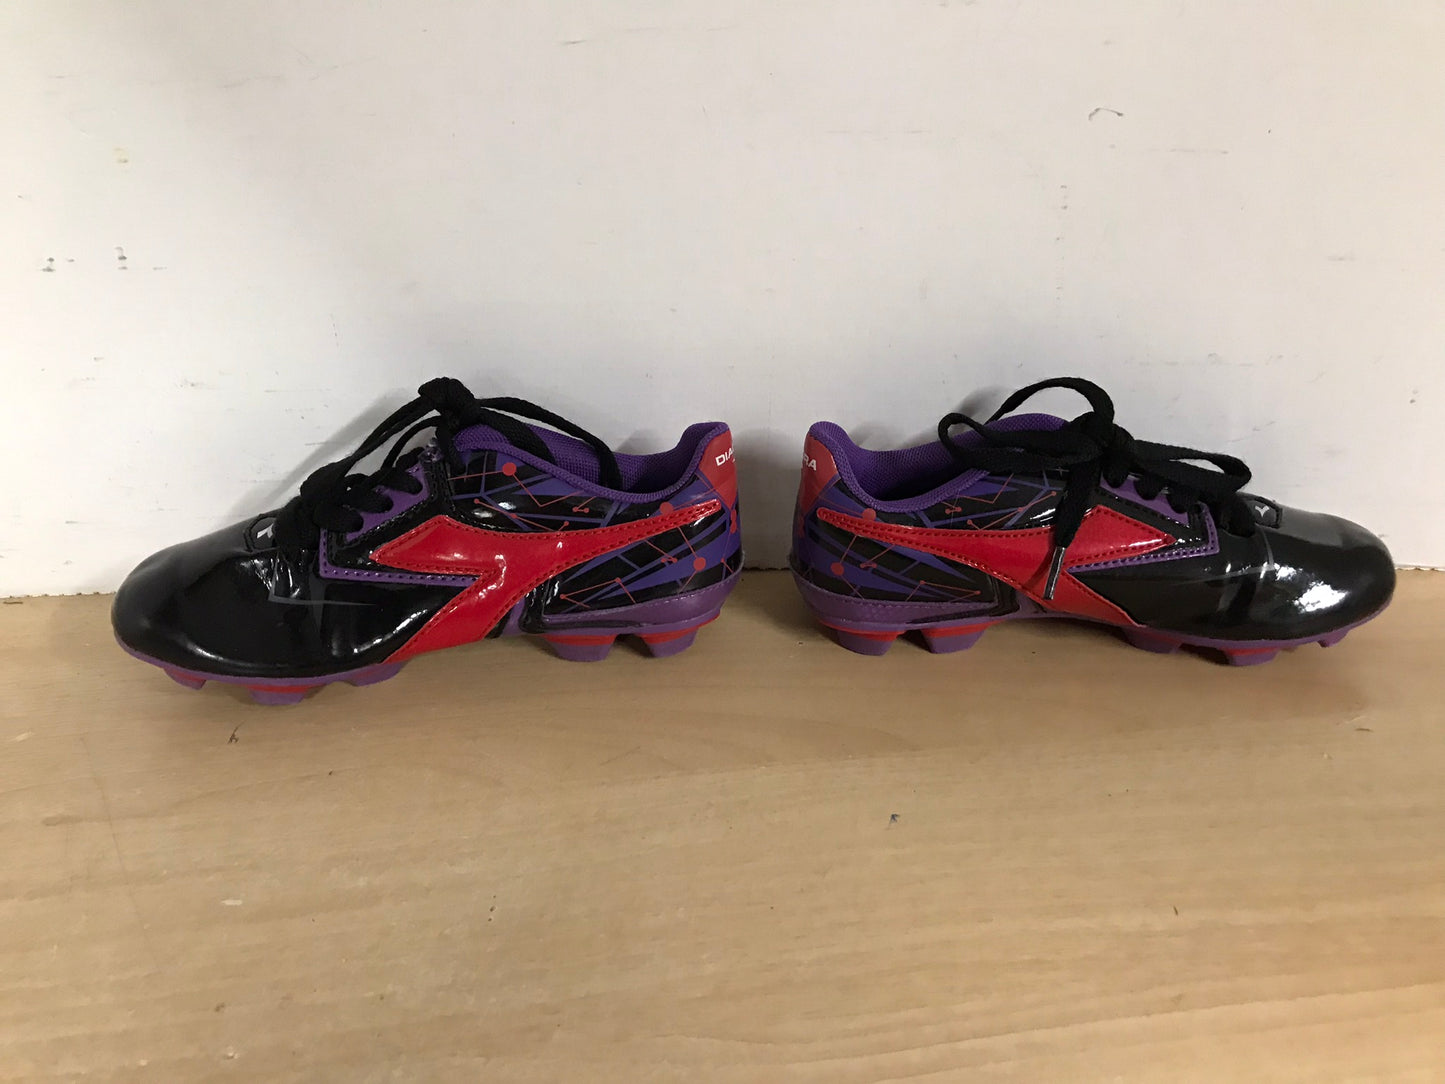 Soccer Shoes Cleats Child Size 3 Diadora Purple Red Black Excellent